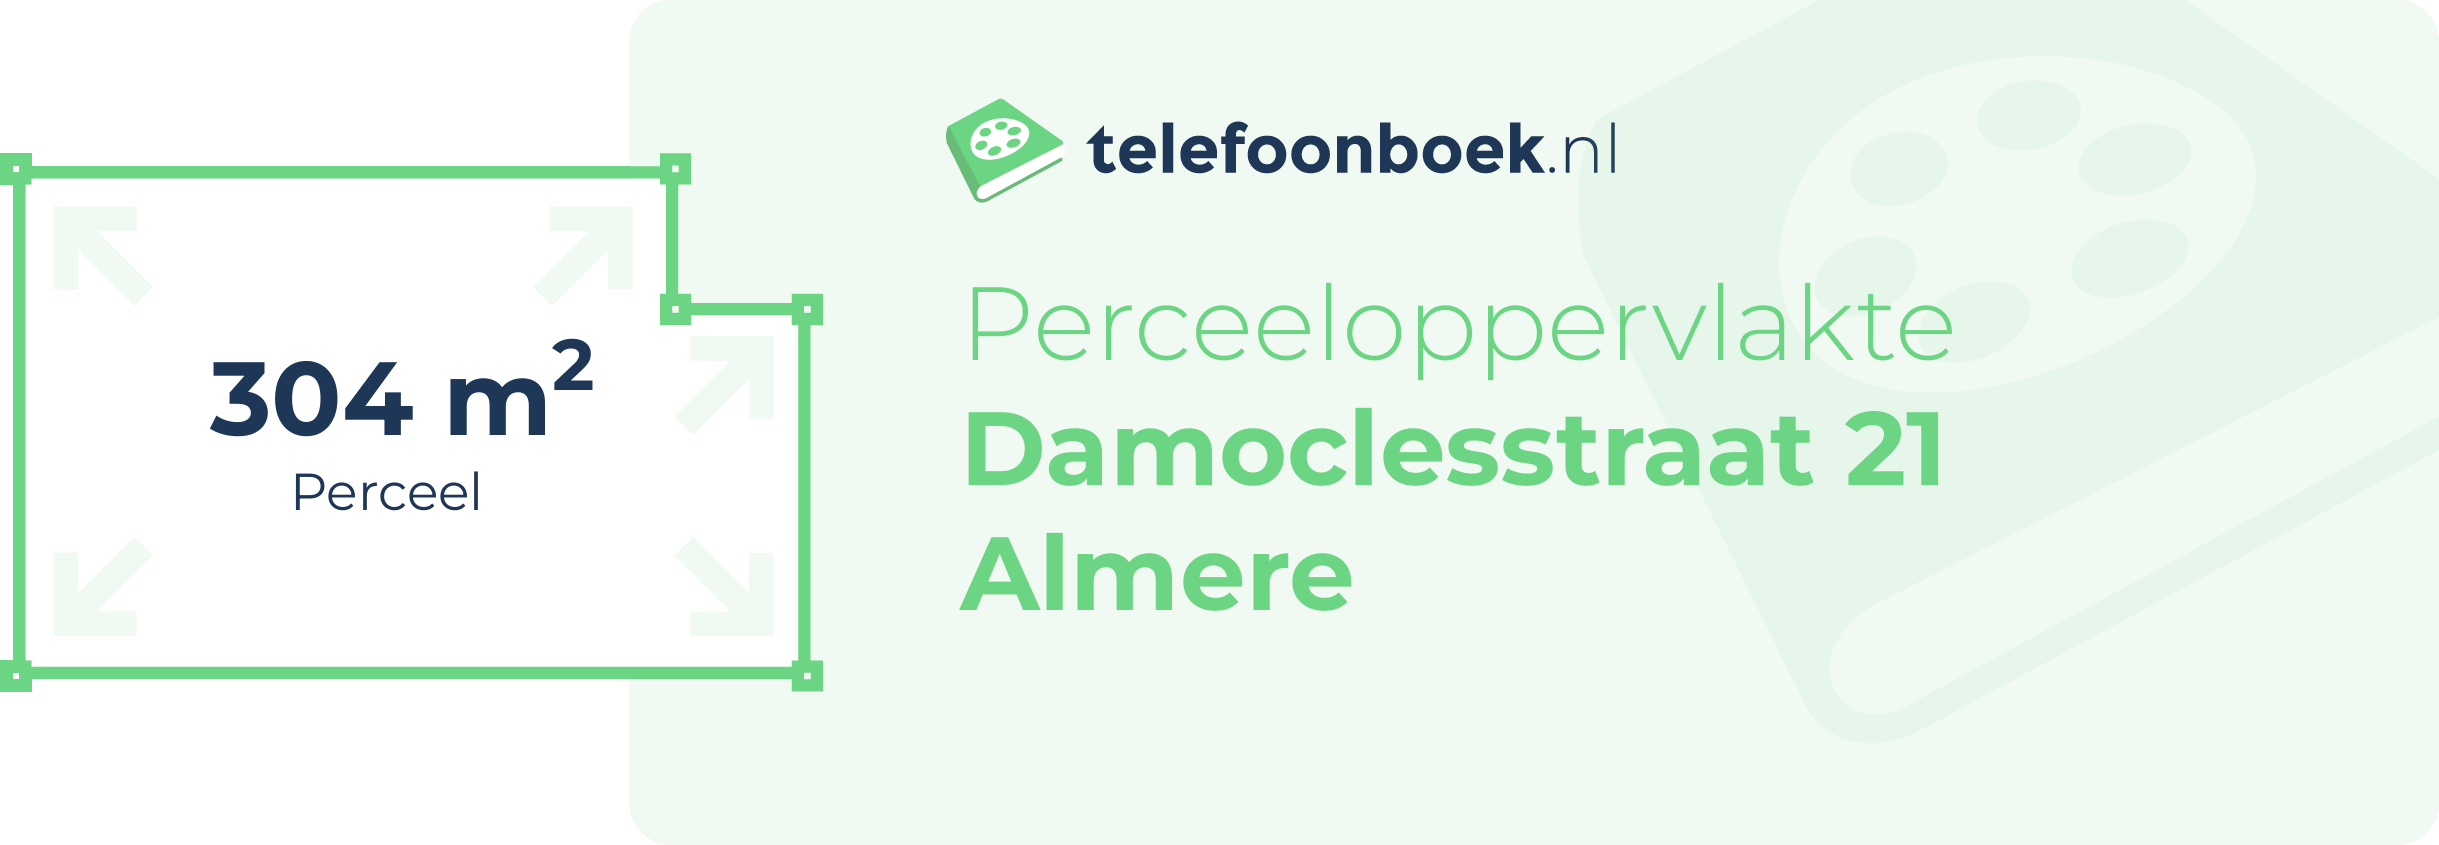 Perceeloppervlakte Damoclesstraat 21 Almere